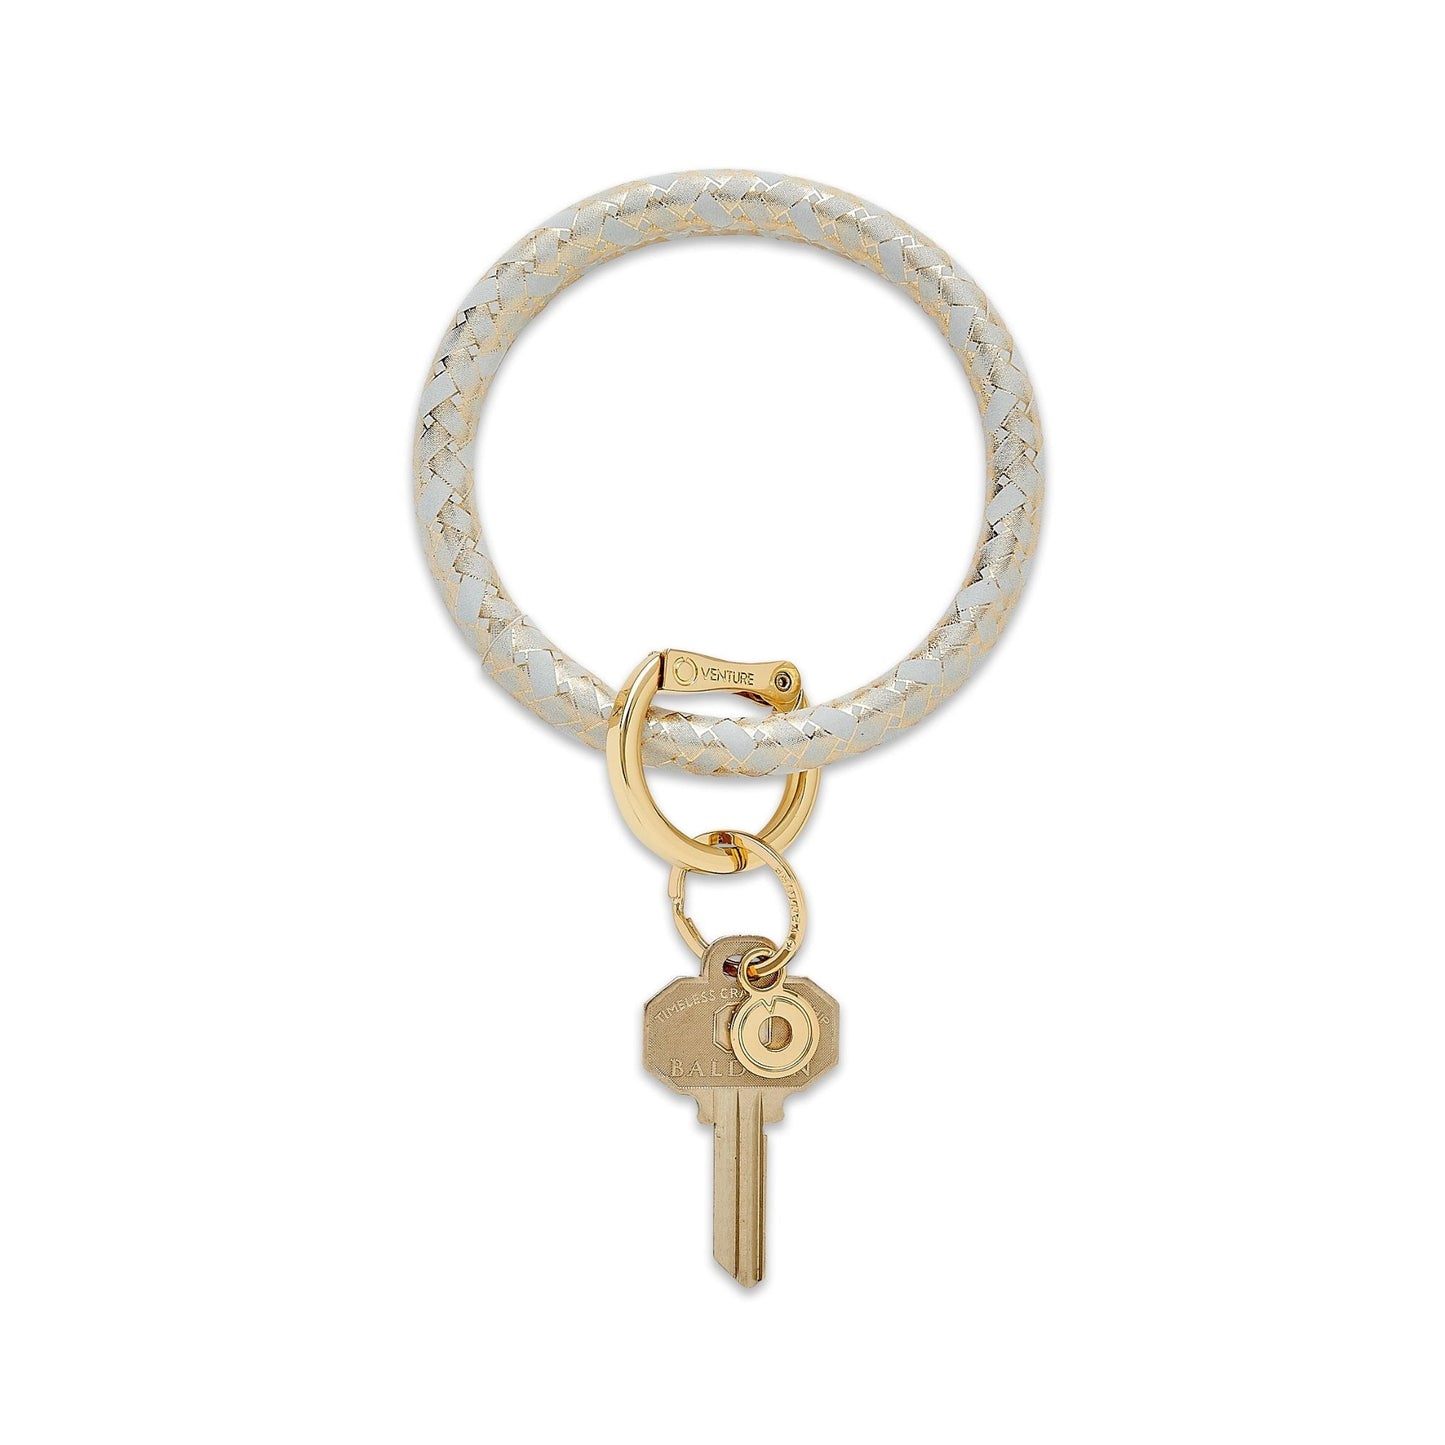 Gold Rush Basketweave - Leather Big O Key Ring - Oventure Gold and white printed basketweave keyring